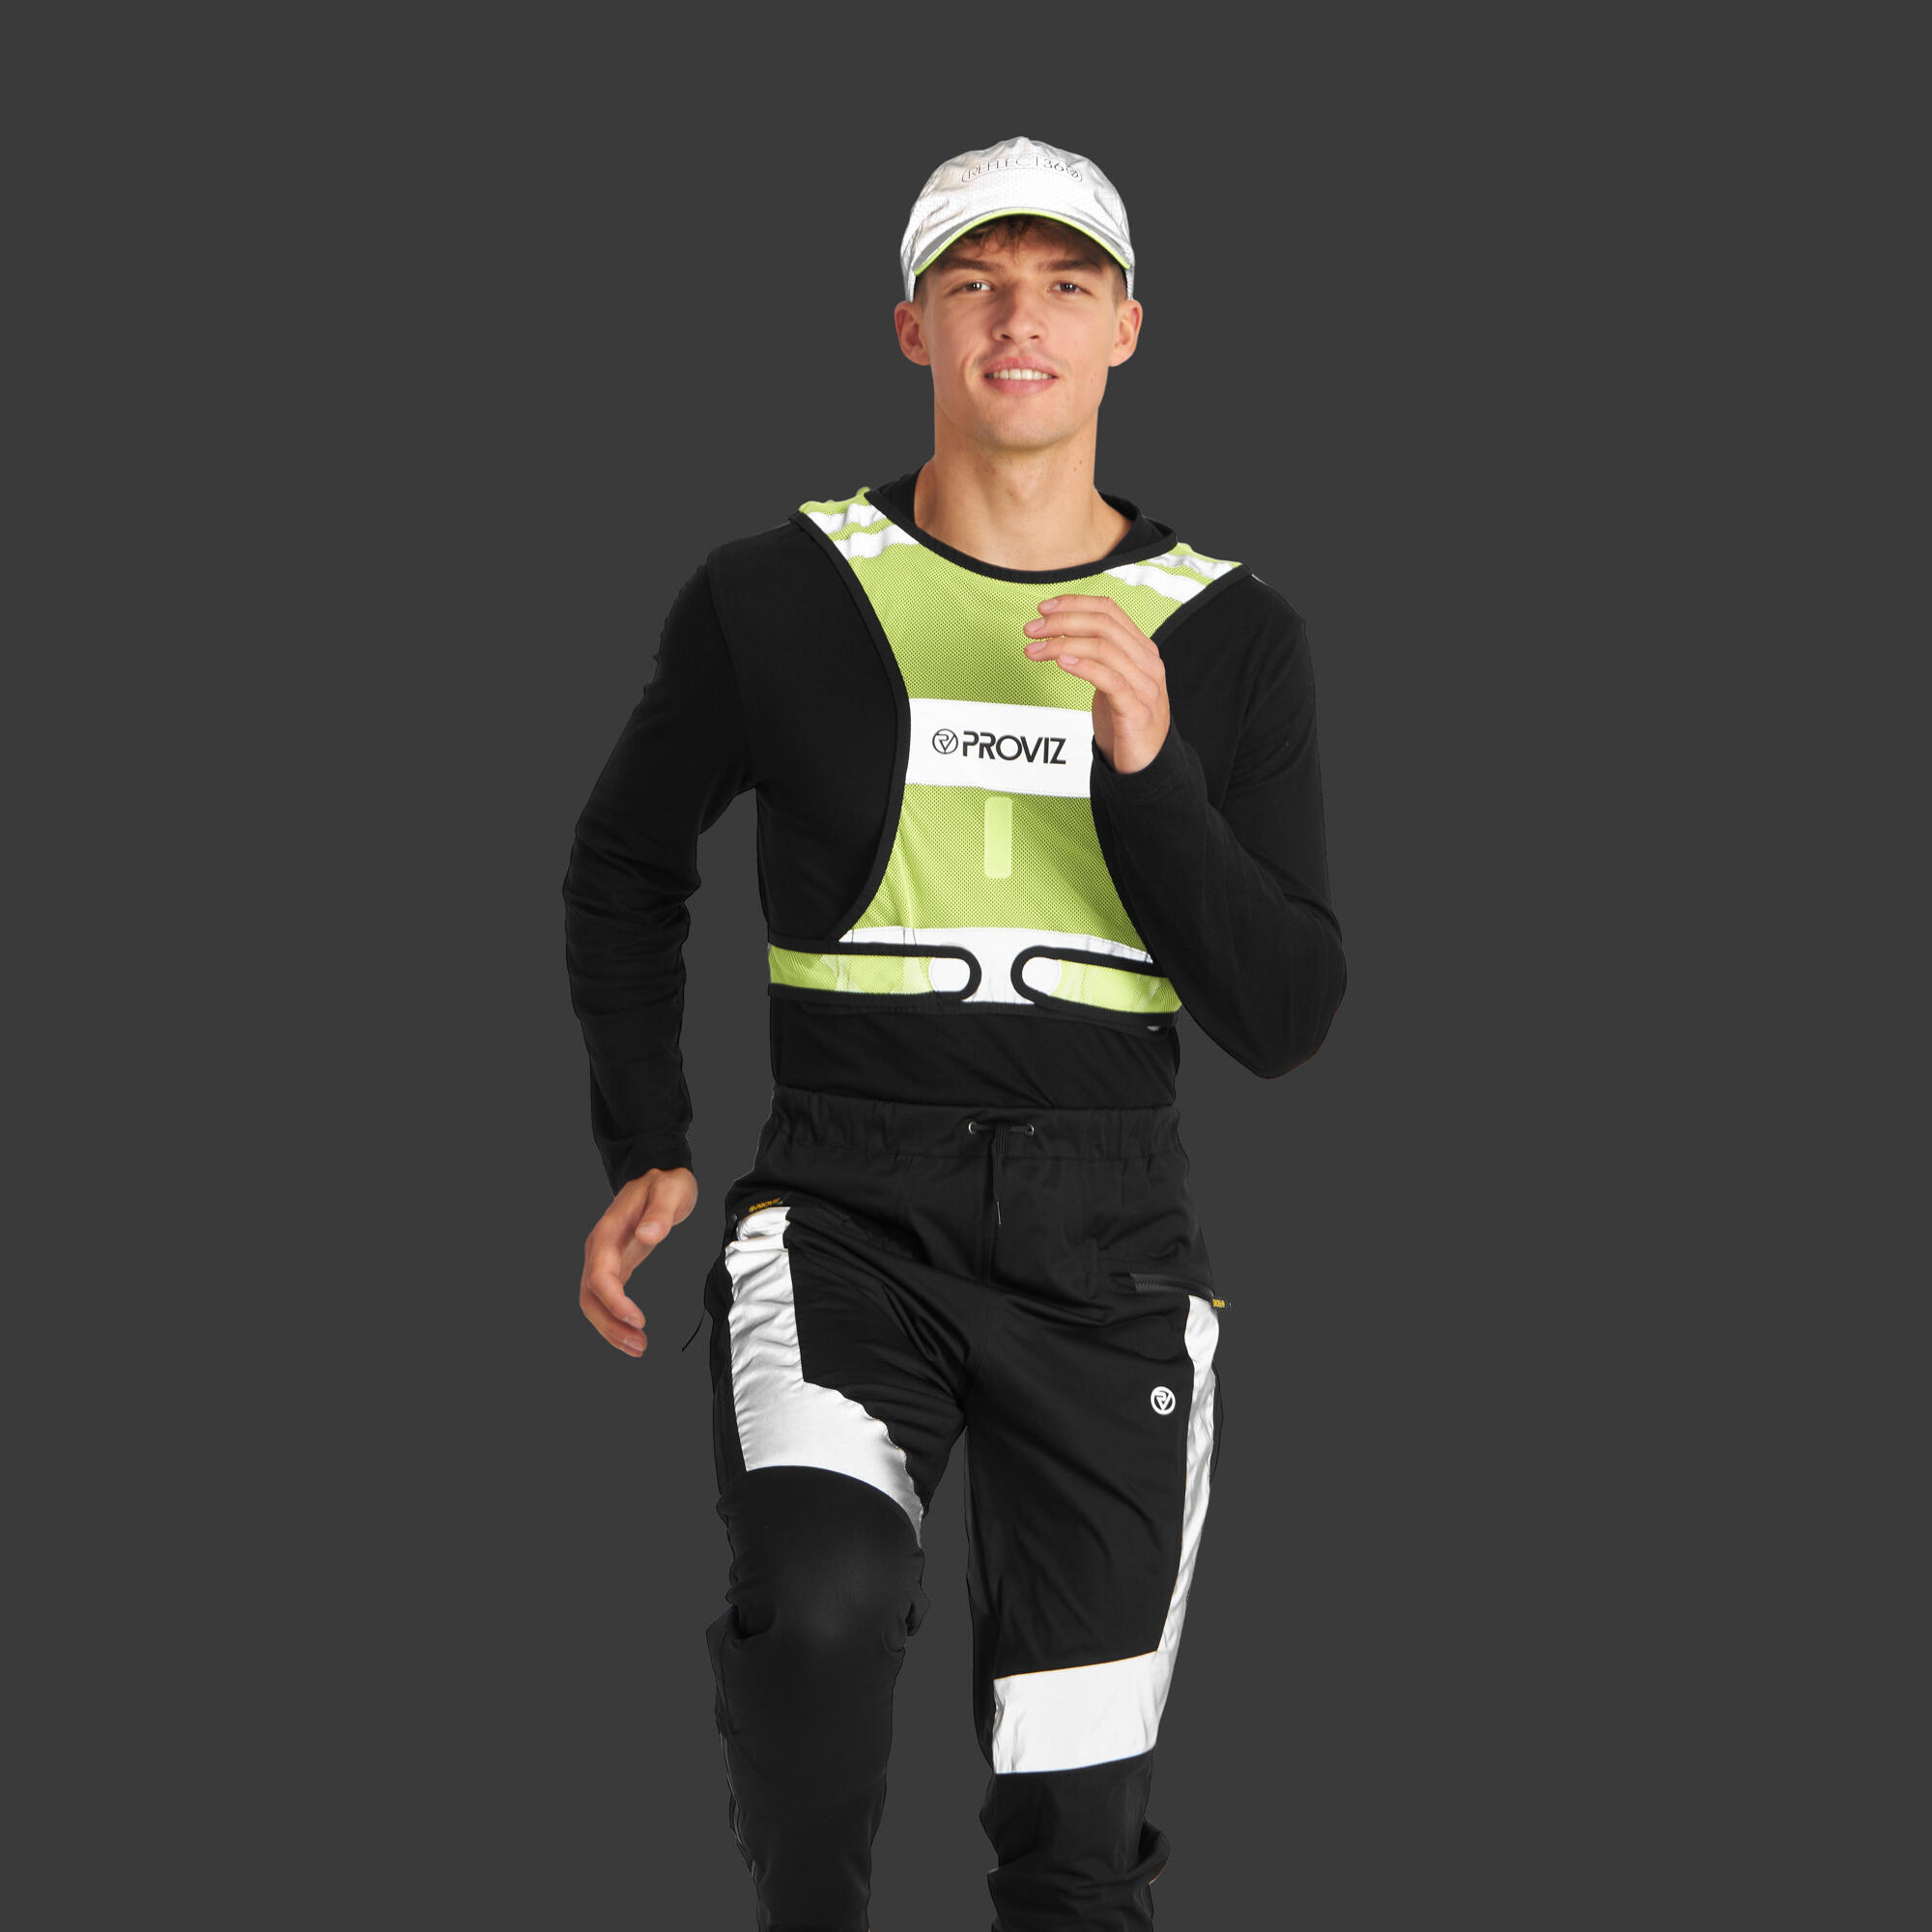 Proviz Classic Breathable Reflective Unisex Running Vest 3/7